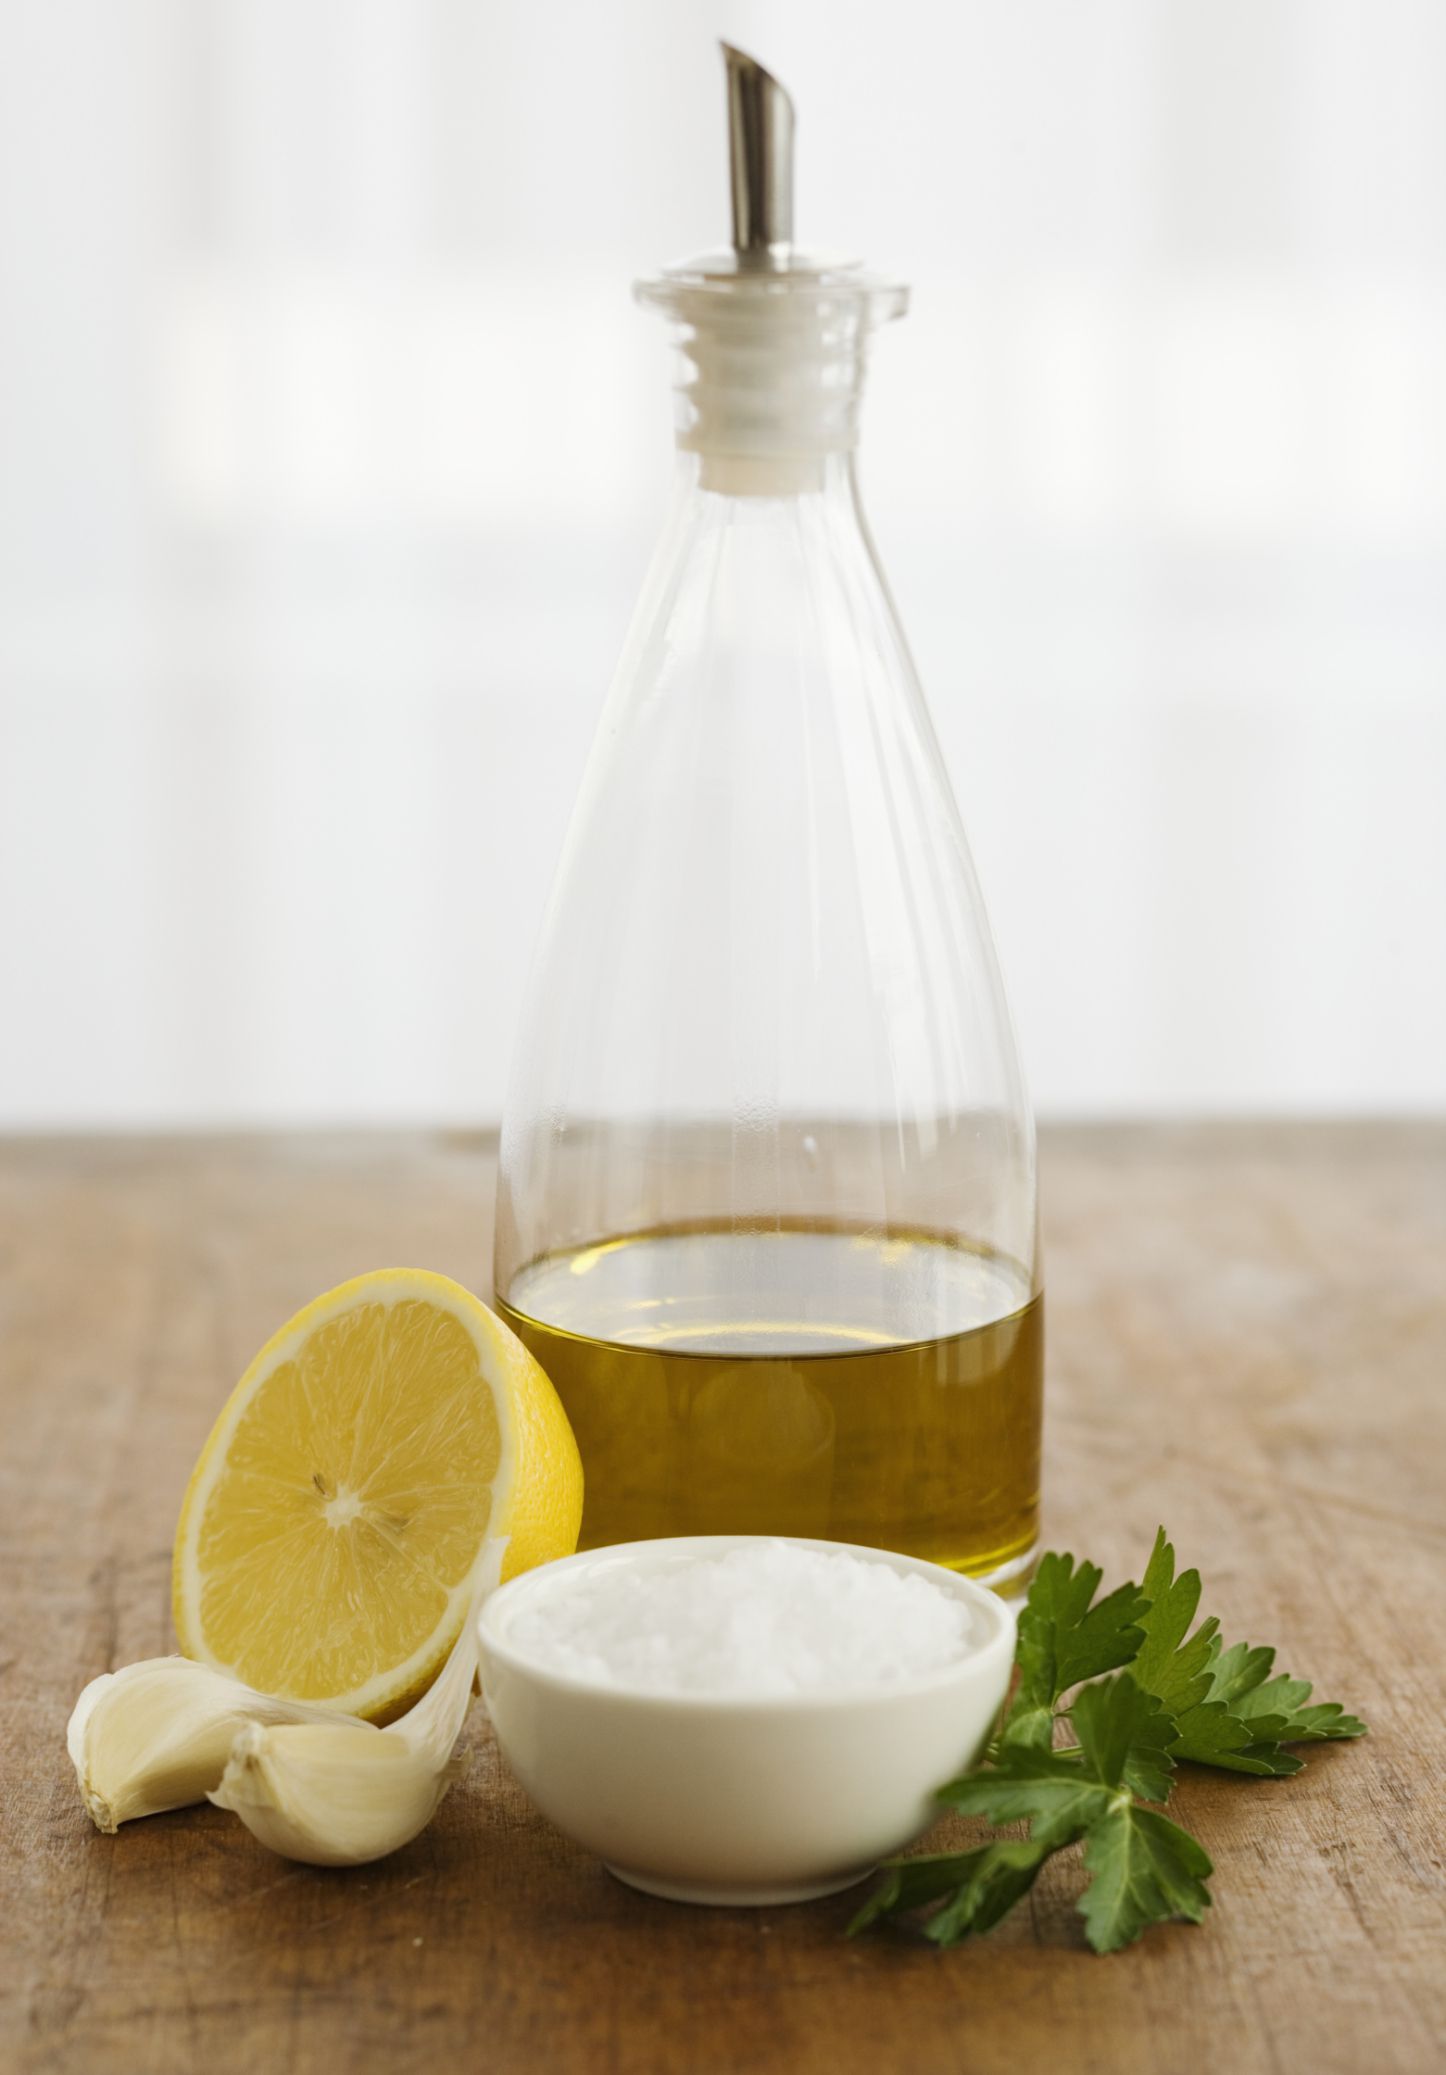 How to Make LemonInfused Olive Oil